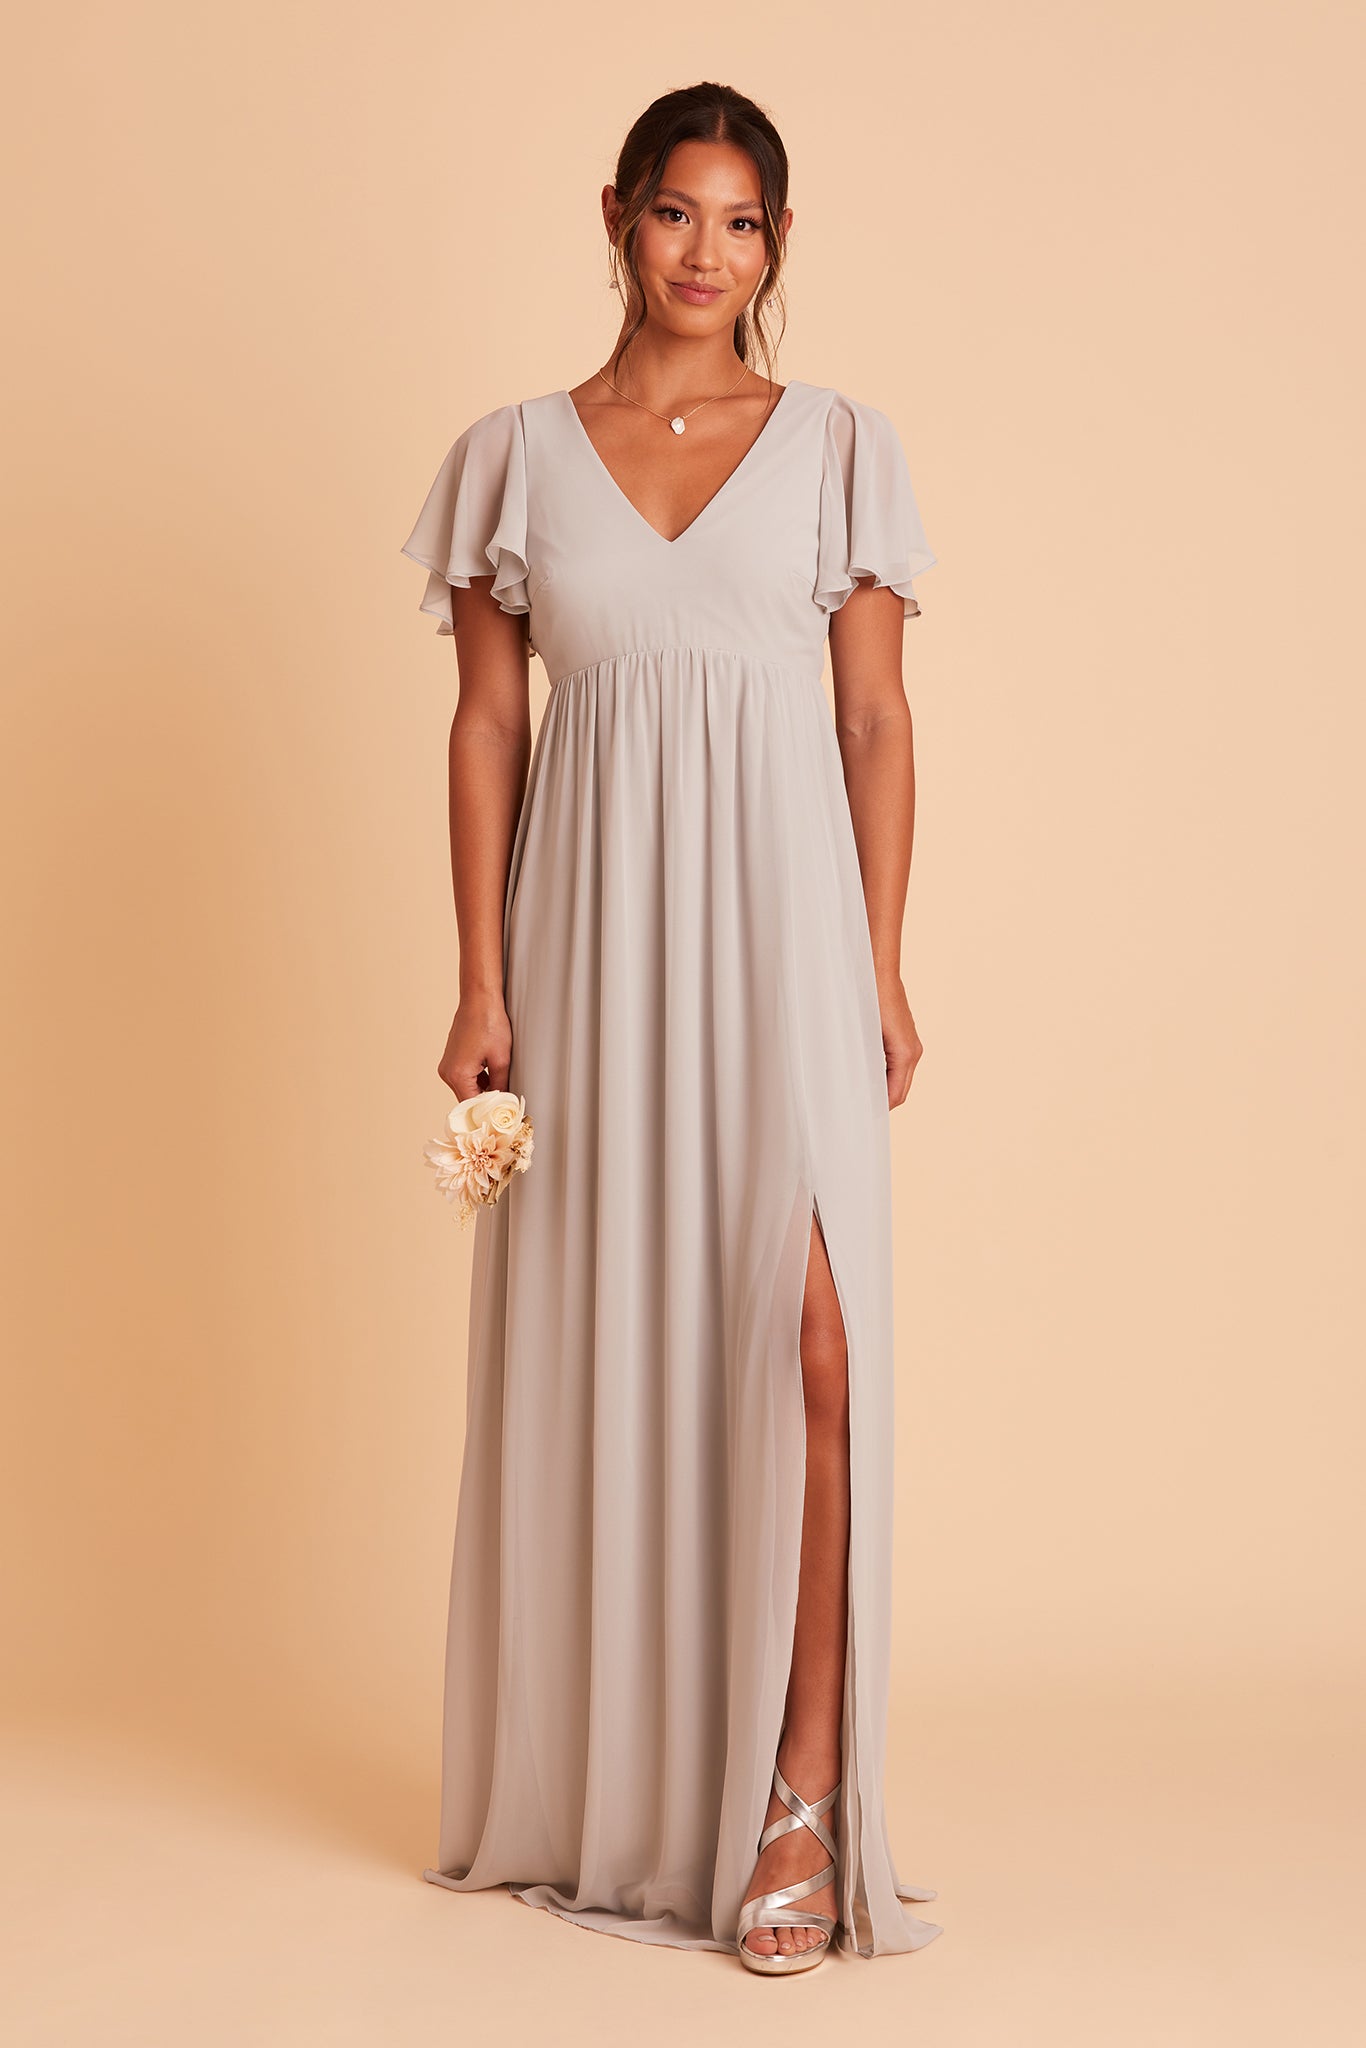 Birdy Grey Dress  Gray dress, Clothes design, Dress